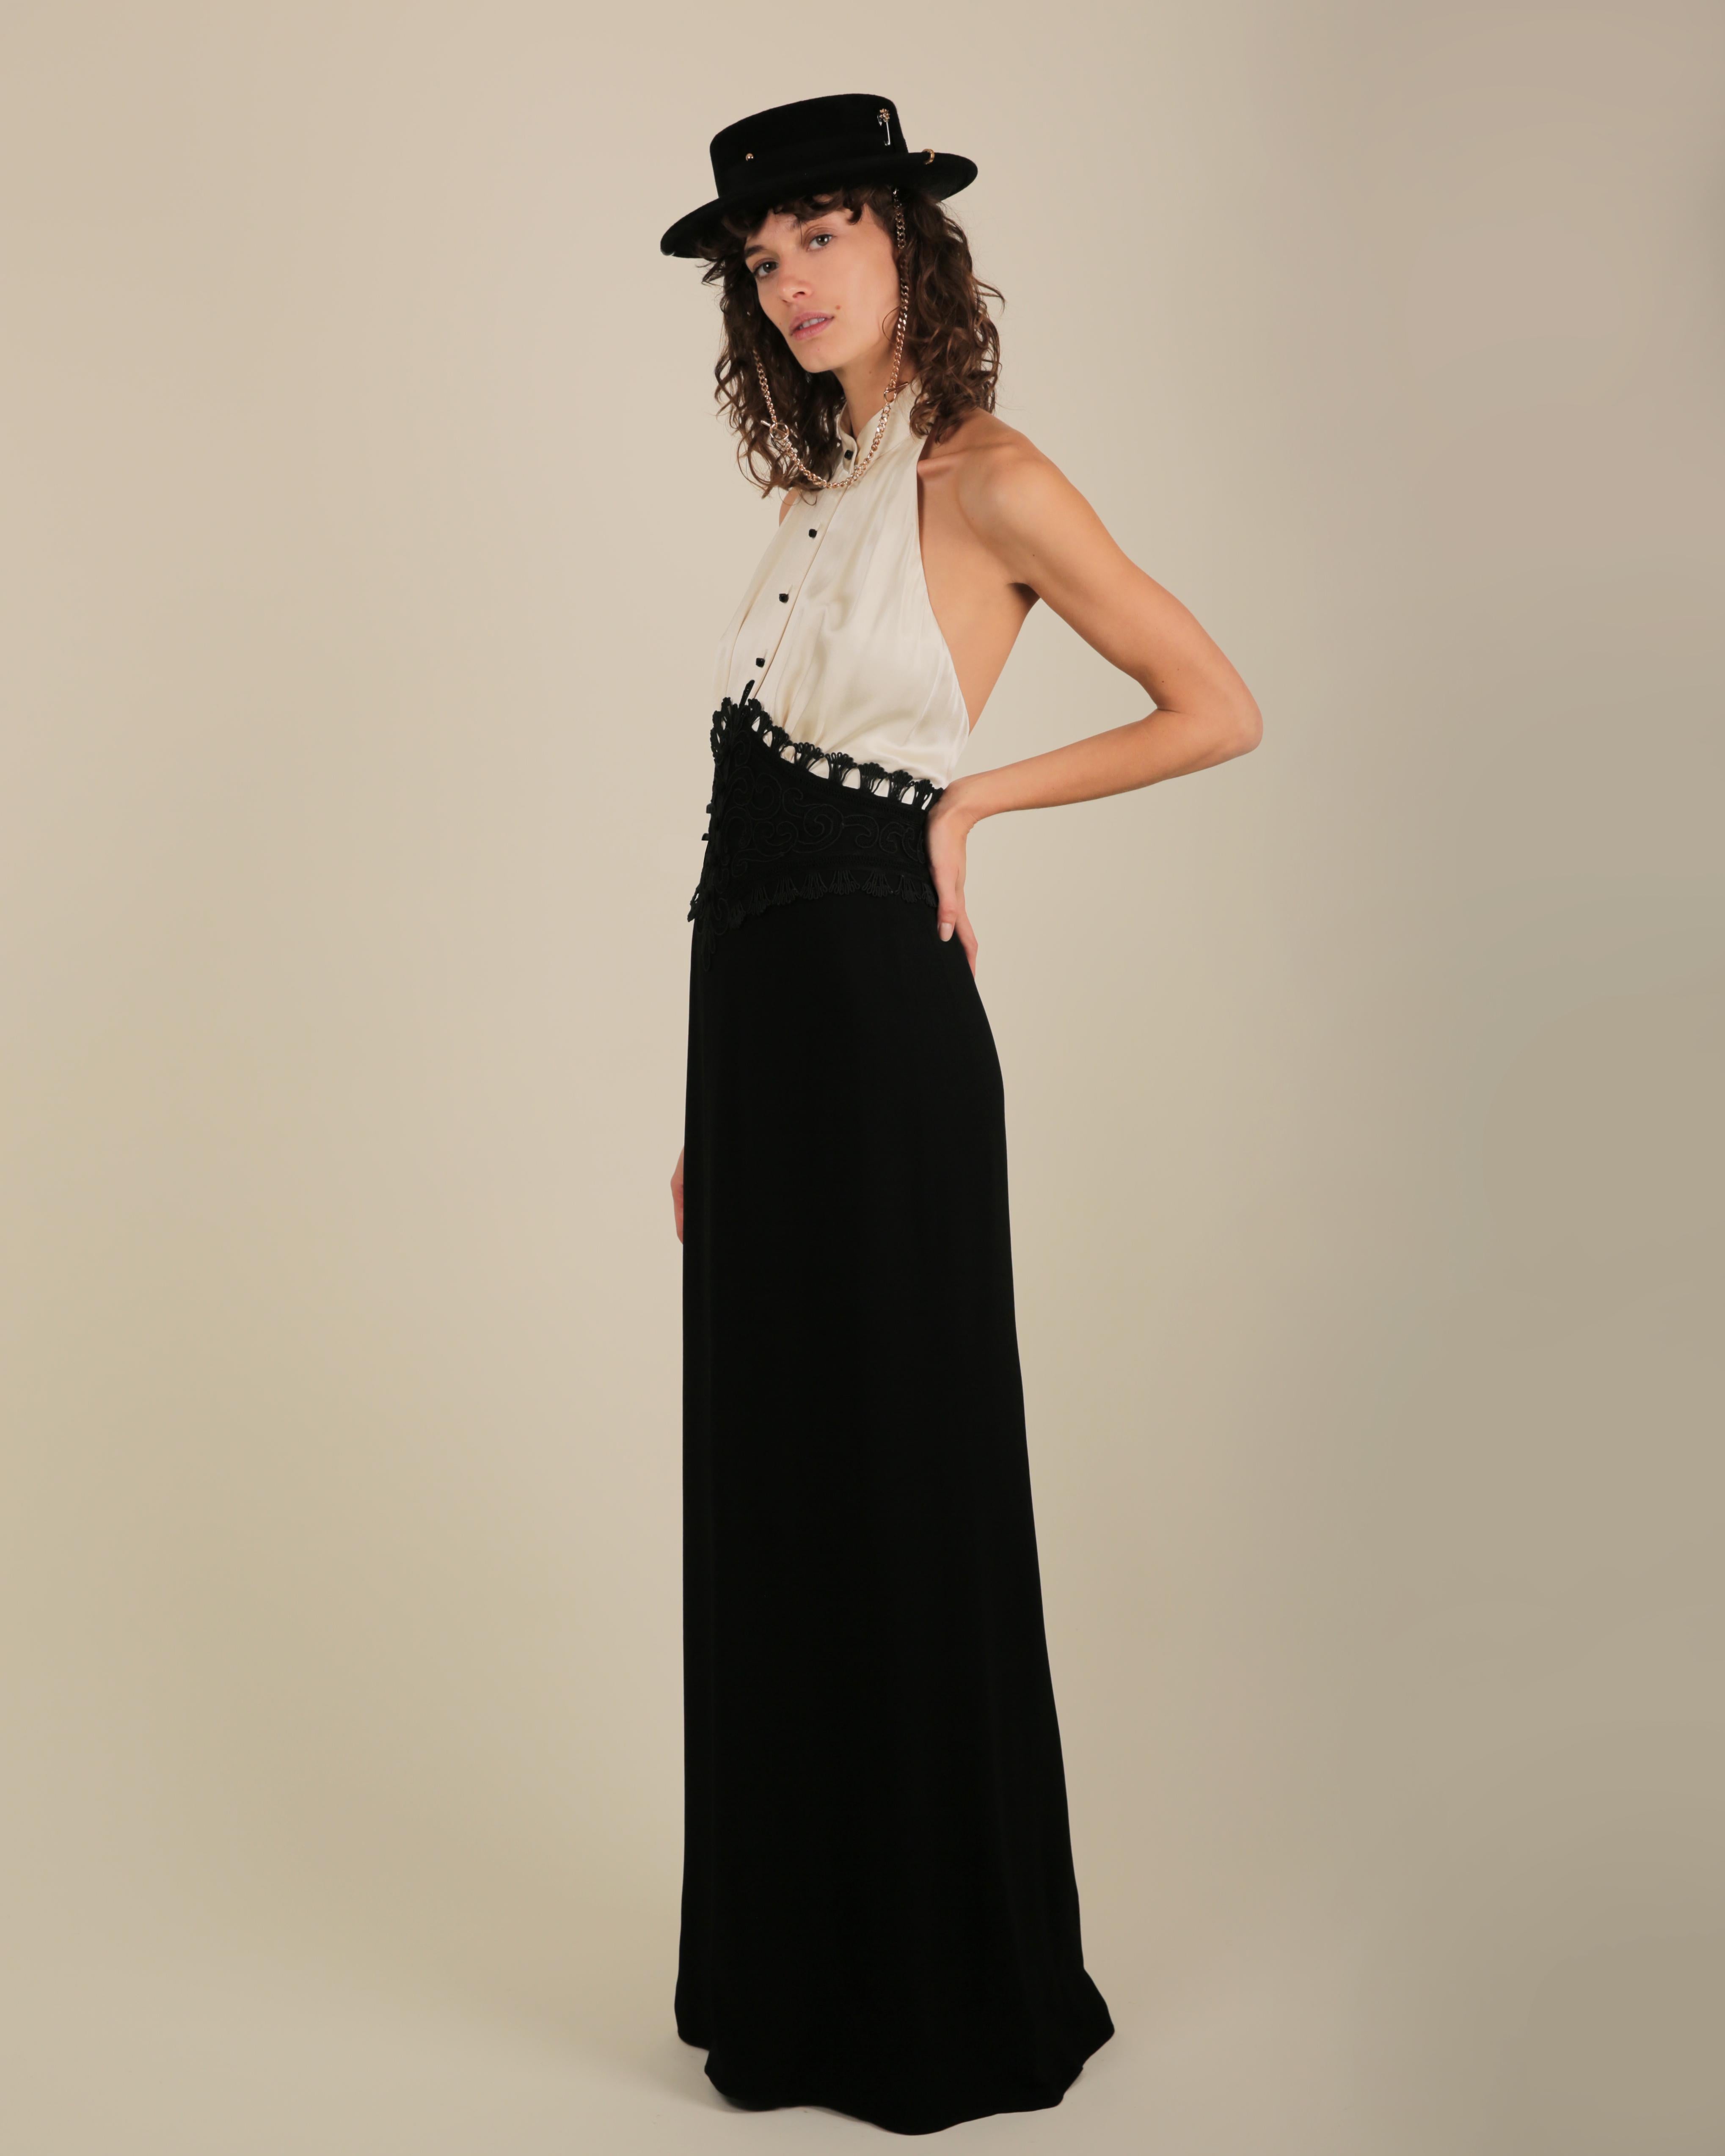 Ralph Lauren SS 2013 black white sleeveless halter backless button up dress gown For Sale 4